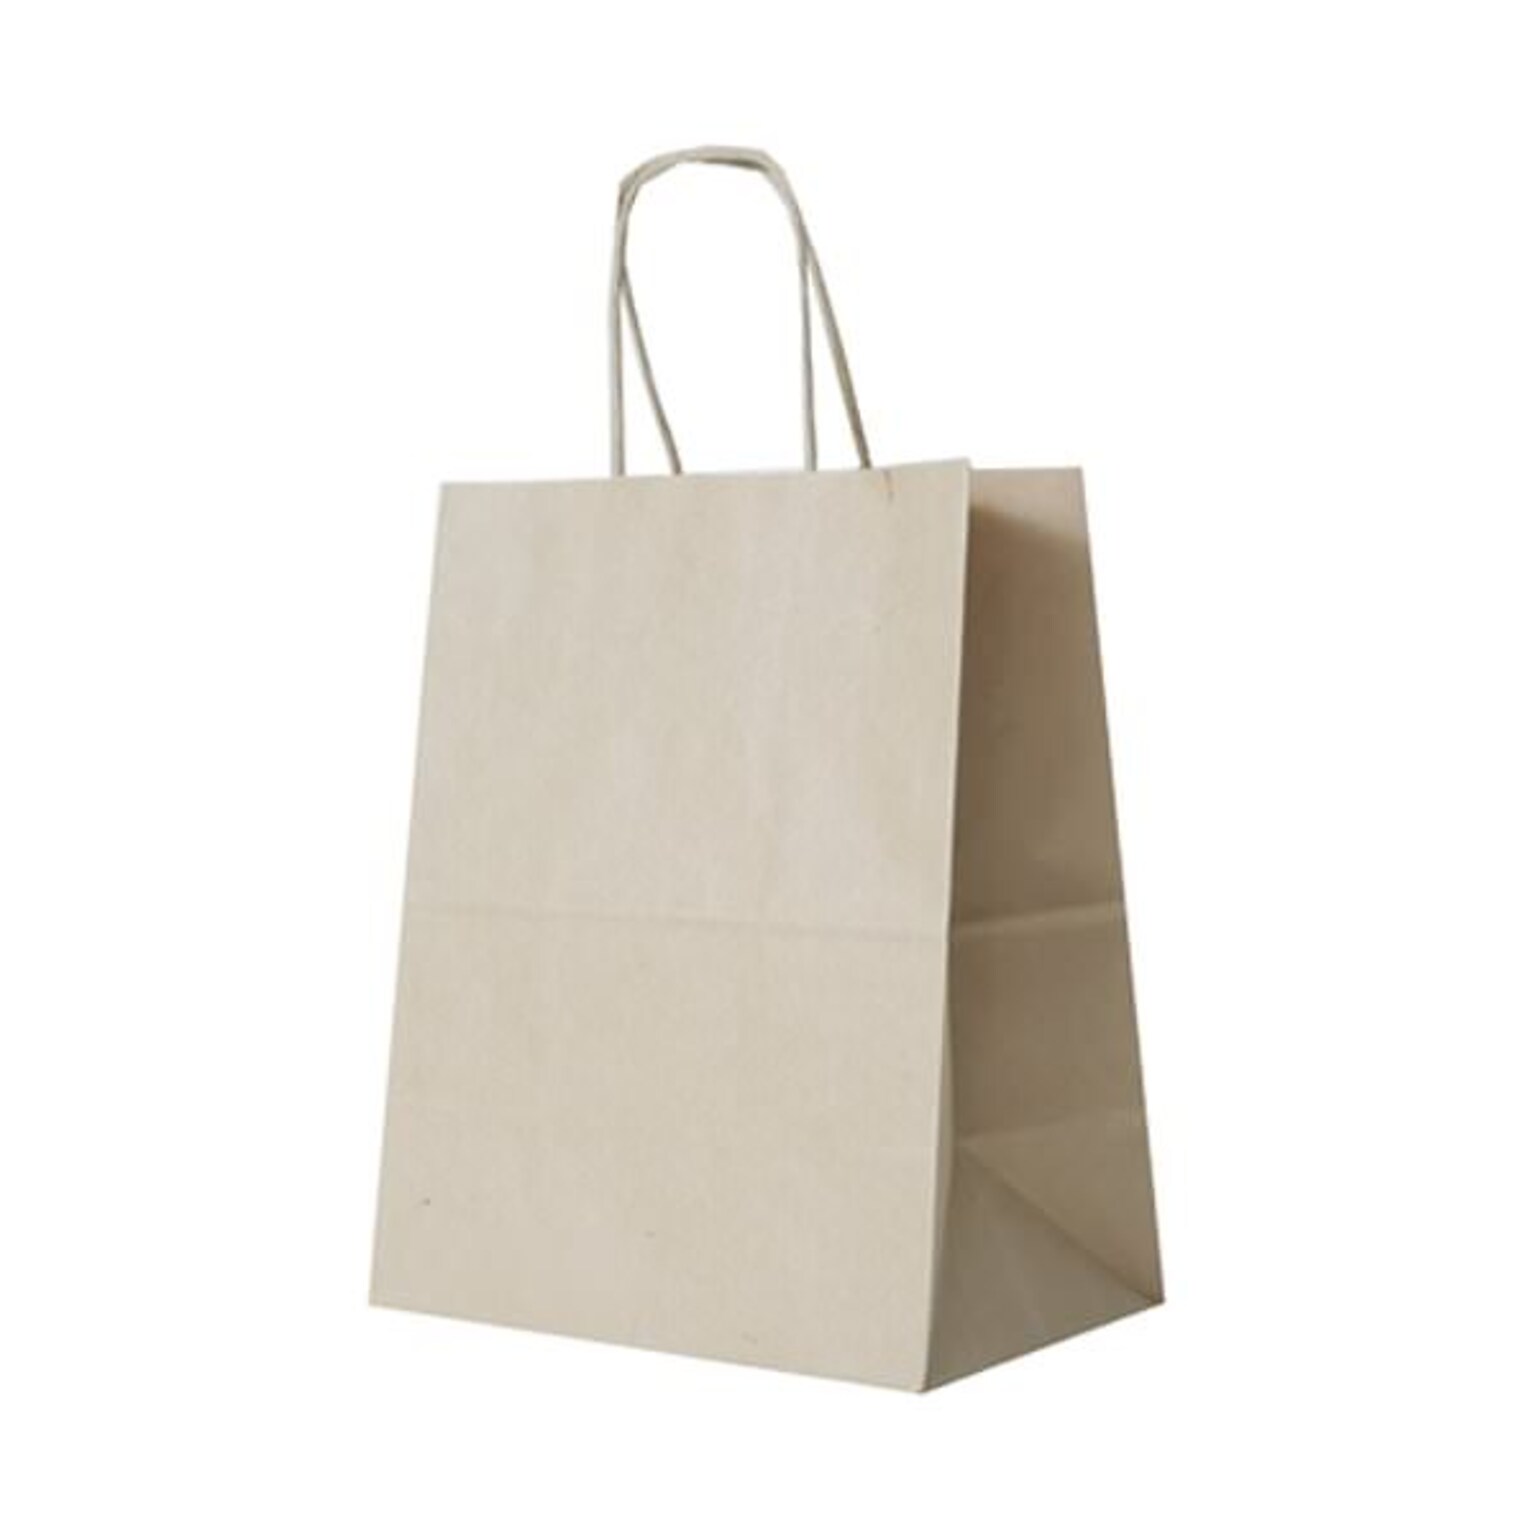 JAM Paper Solid Kraft Gift Bag, Large, Brown, 100 Bags/Pack (673KRBRB)